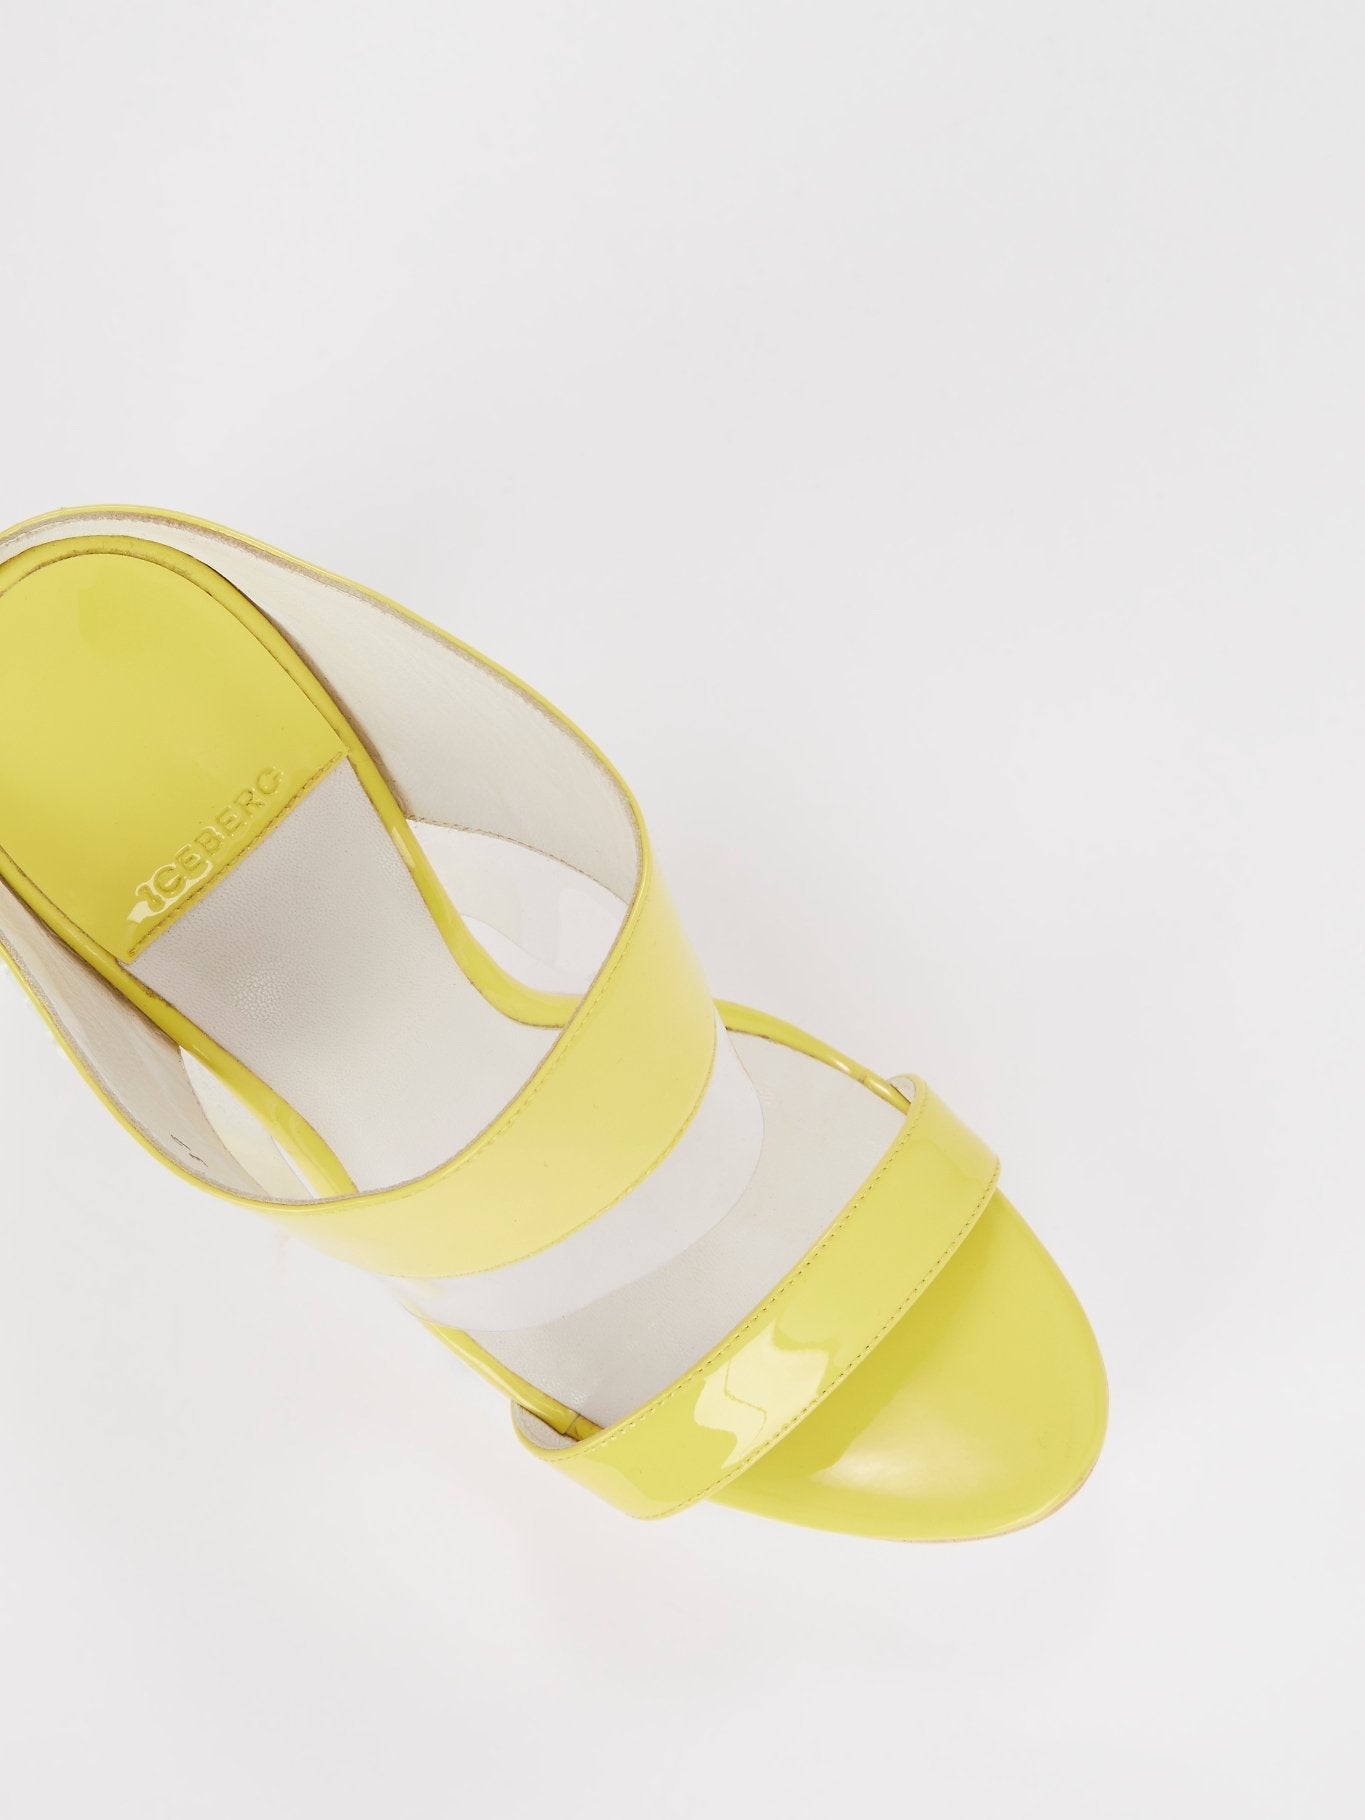 Yellow Block-Heel Patent Leather Sandals